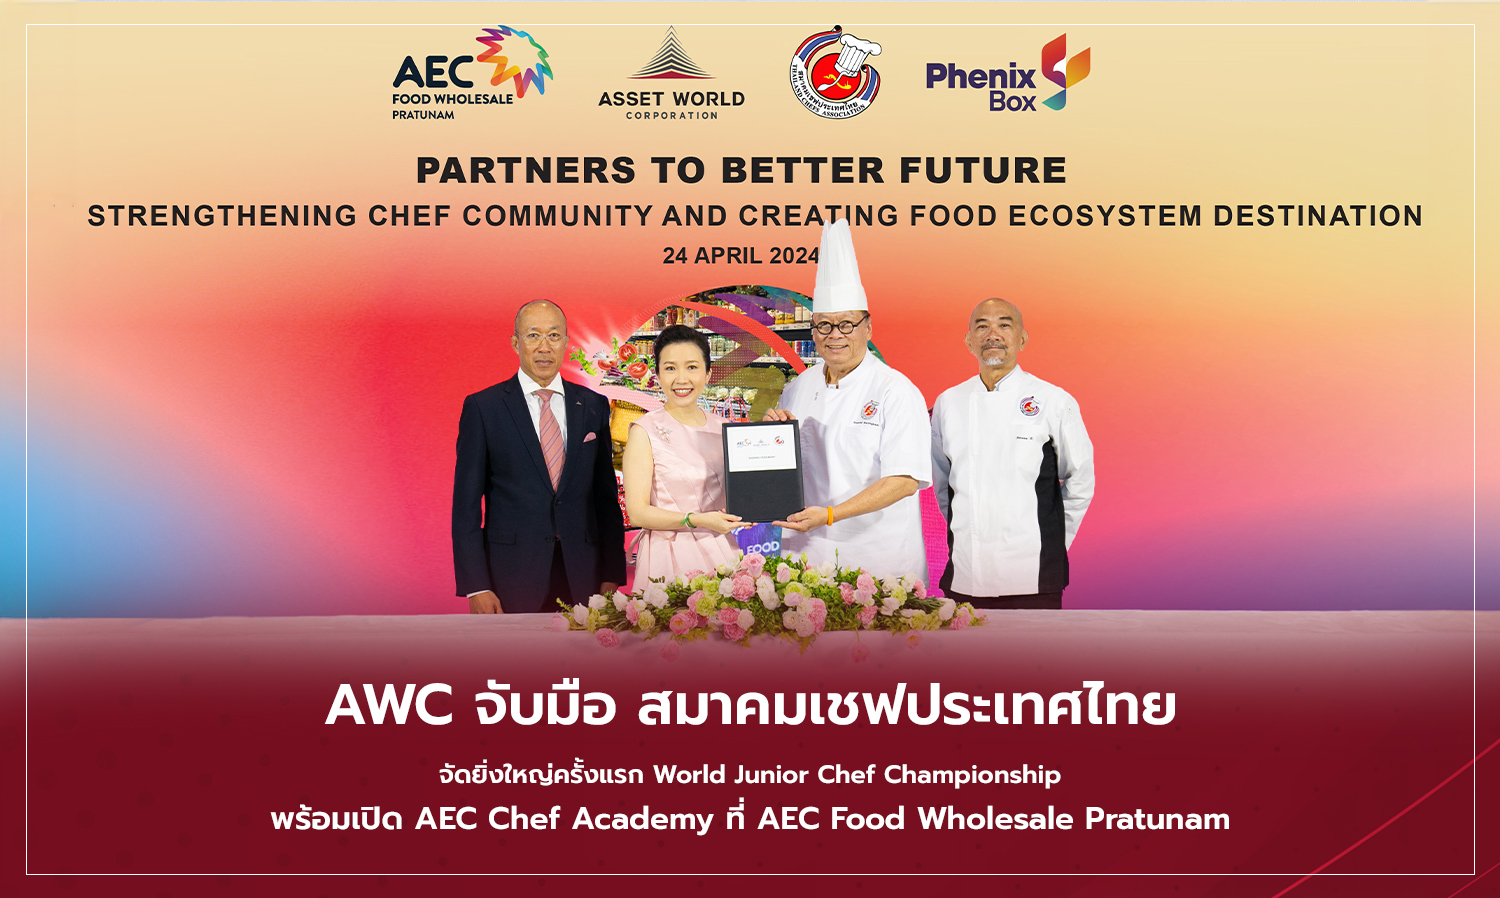 AWC จับมือ สมาคมเชฟประเทศไทยจัดยิ่งใหญ่ครั้งแรก World Junior Chef Championship   พร้อมเปิด AEC Chef Academy ที่ AEC Food Wholesale Pratunam